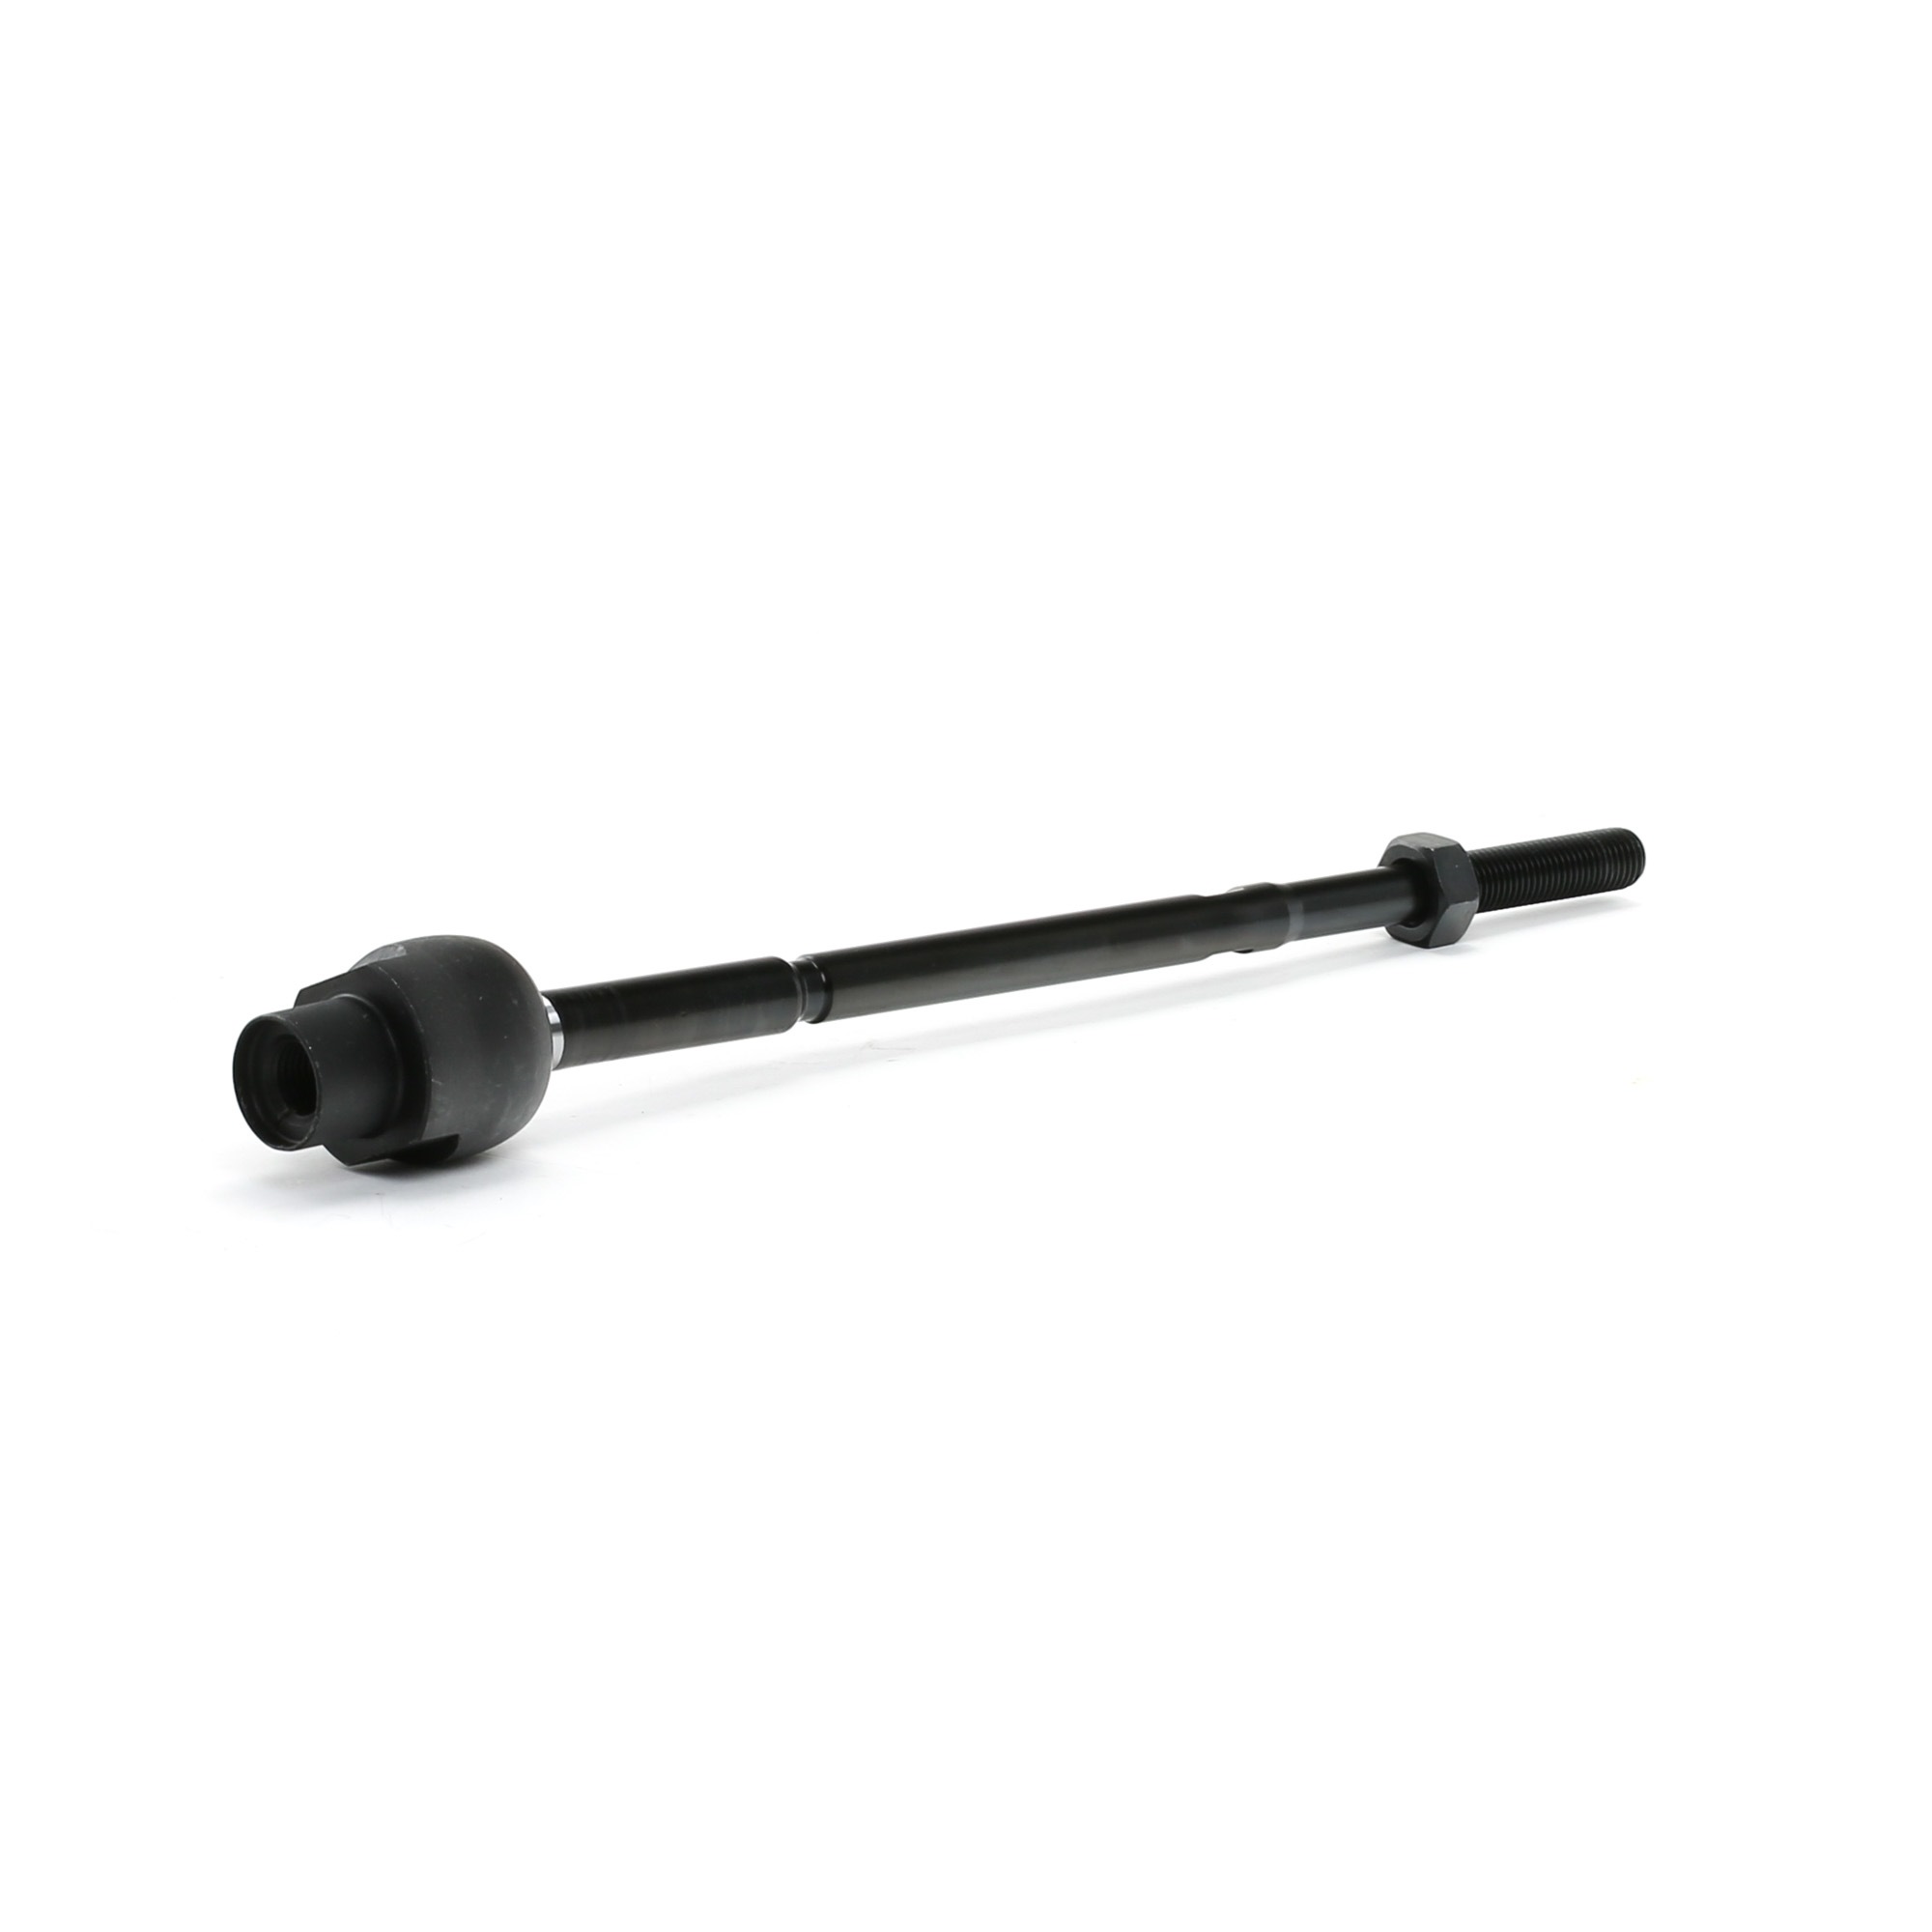 NK 316 mm Length: 316mm Tie rod axle joint 5033661 buy